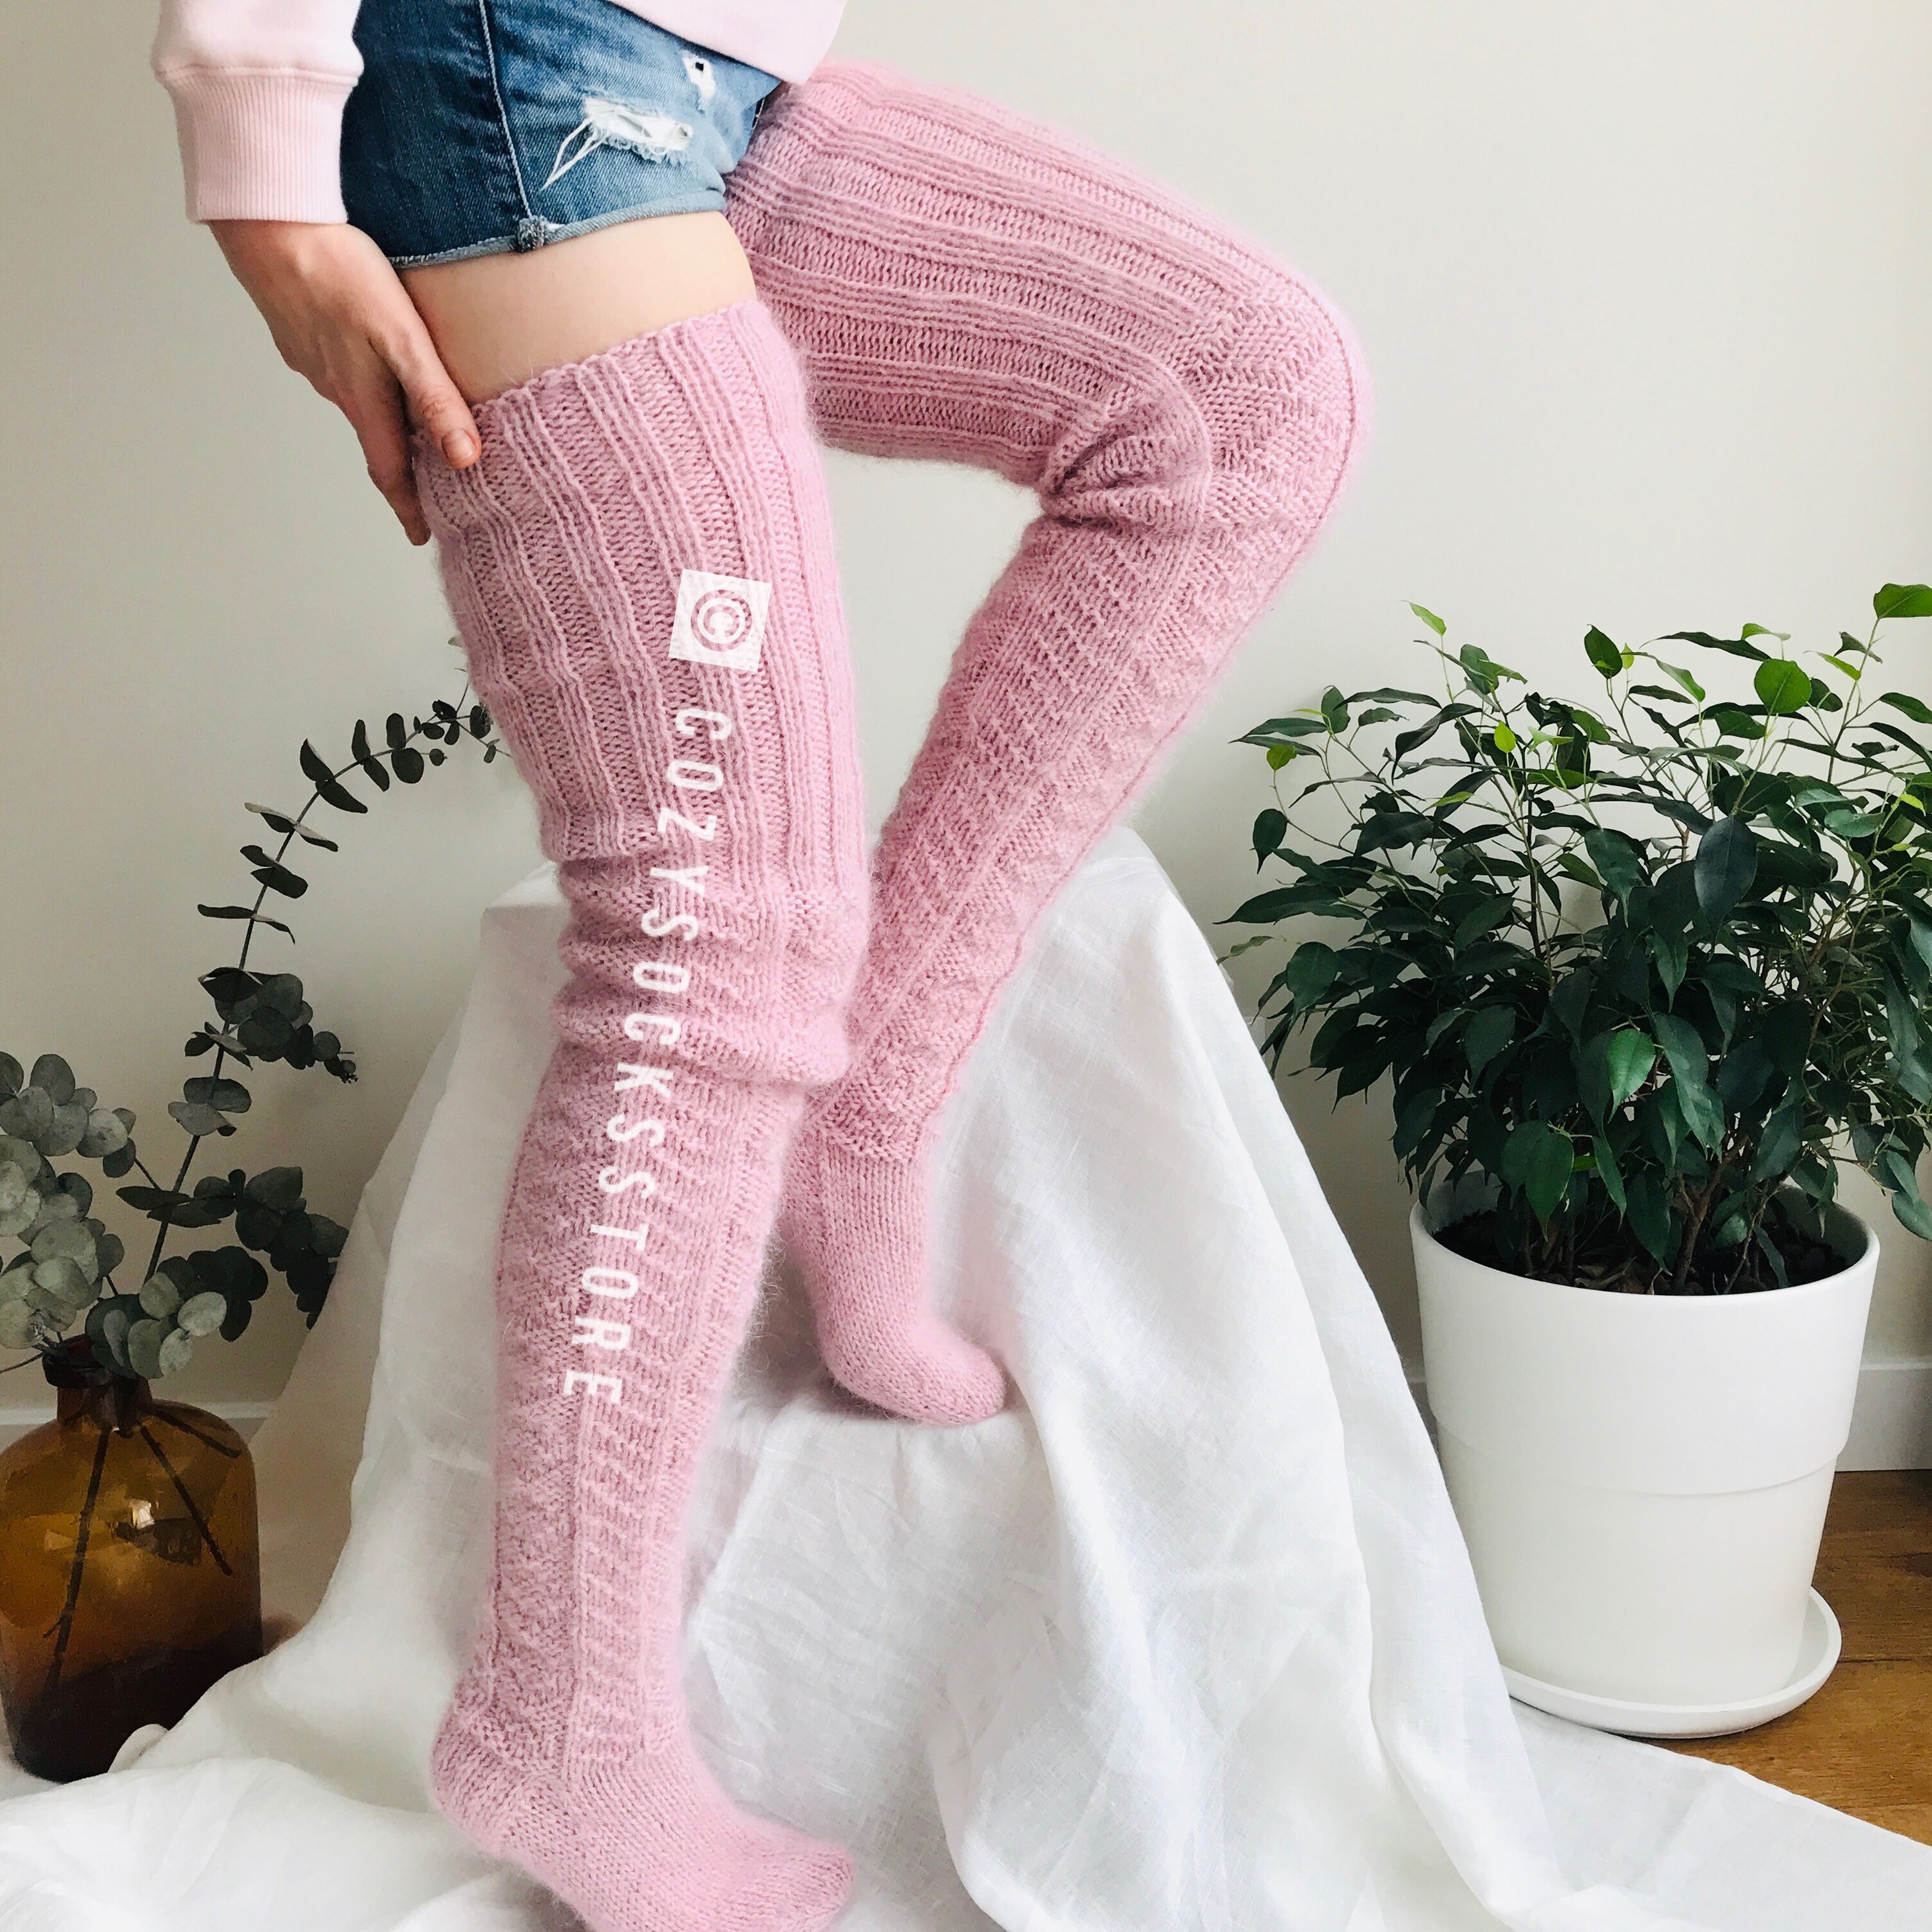 Plus size thigh high socks Knitted socks Pink women socks | Etsy